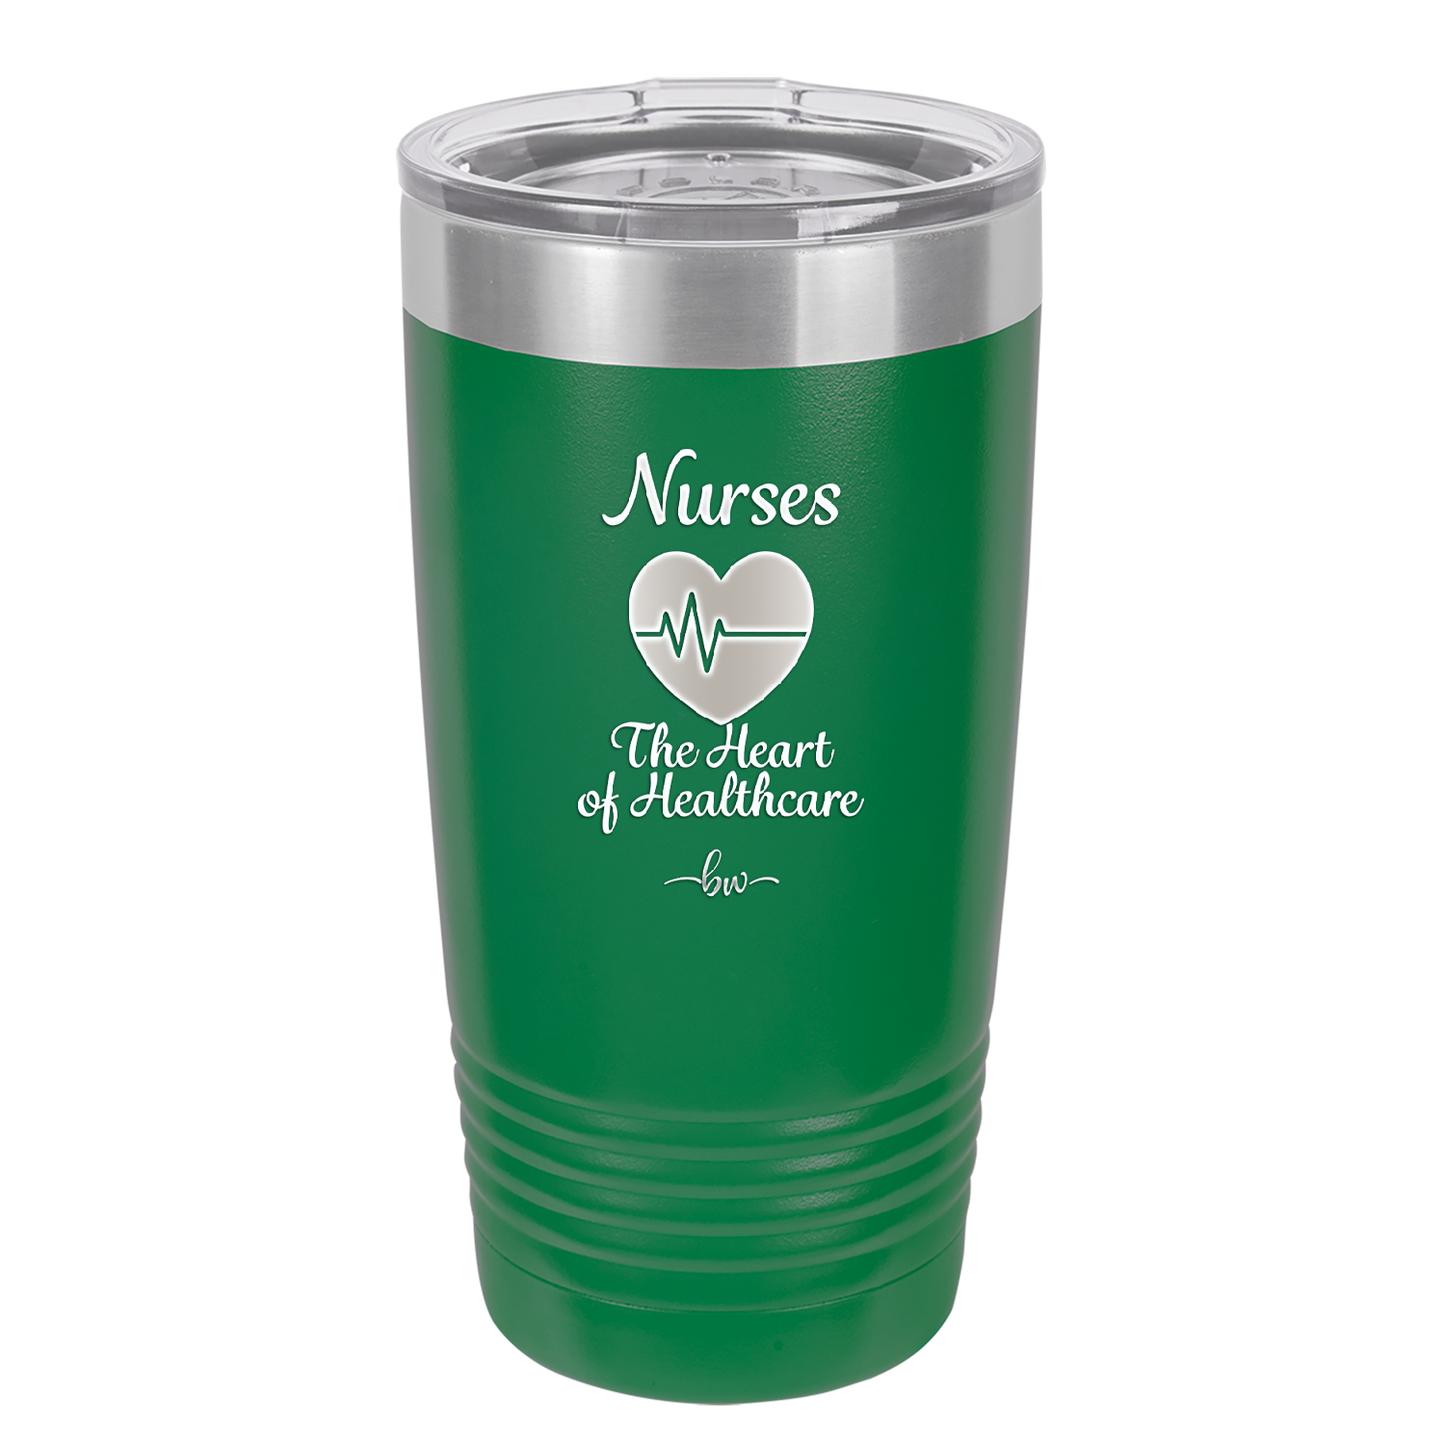 Nursing: The Heart of Healthcare - Laser Engraved Stainless Steel Drinkware - 1272 -